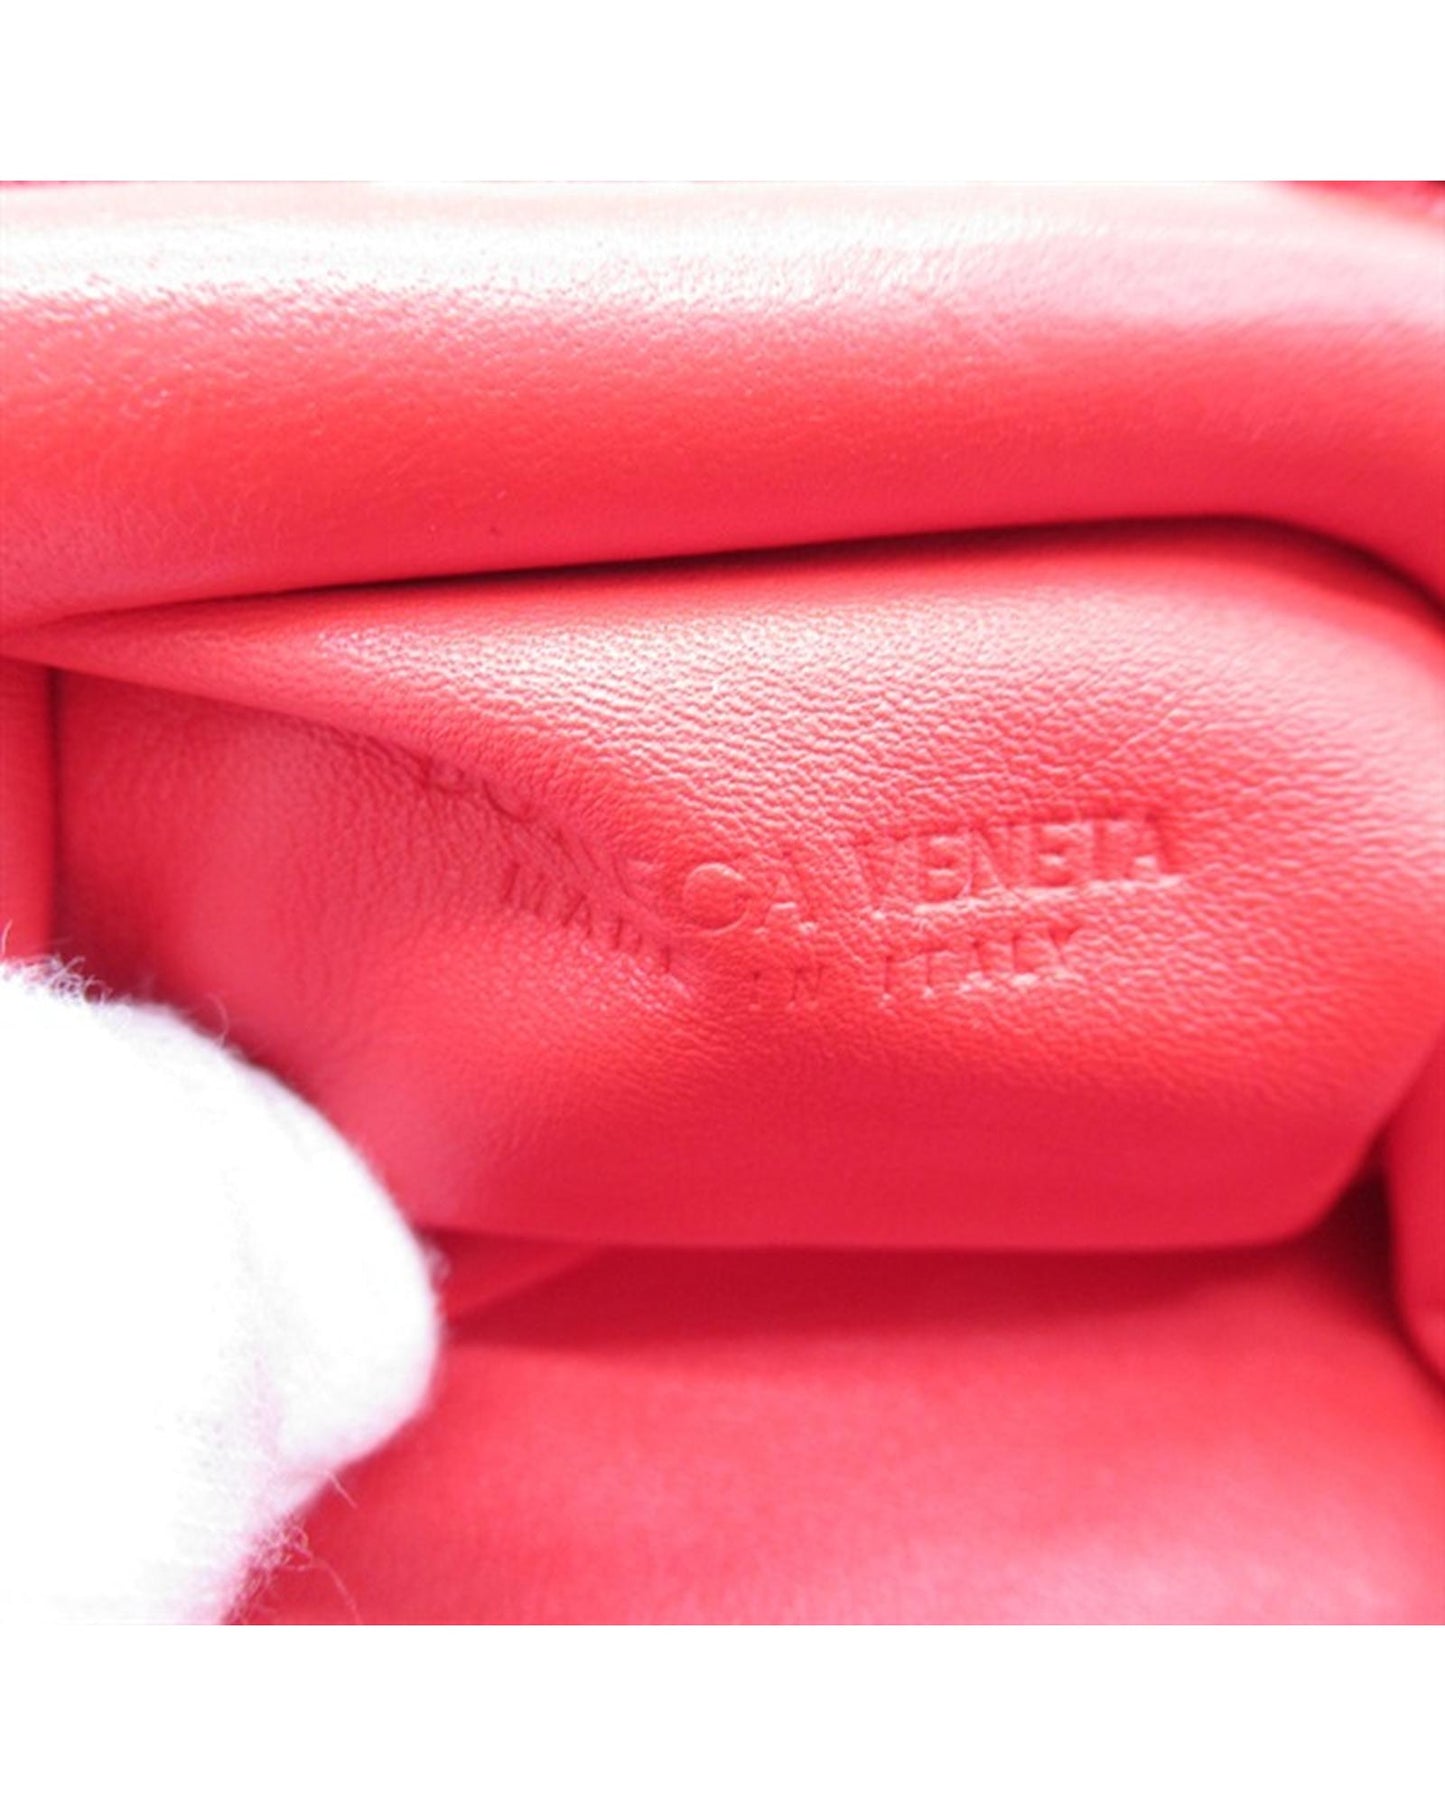 Bottega Veneta Women's Leather Pouch Bag in Red